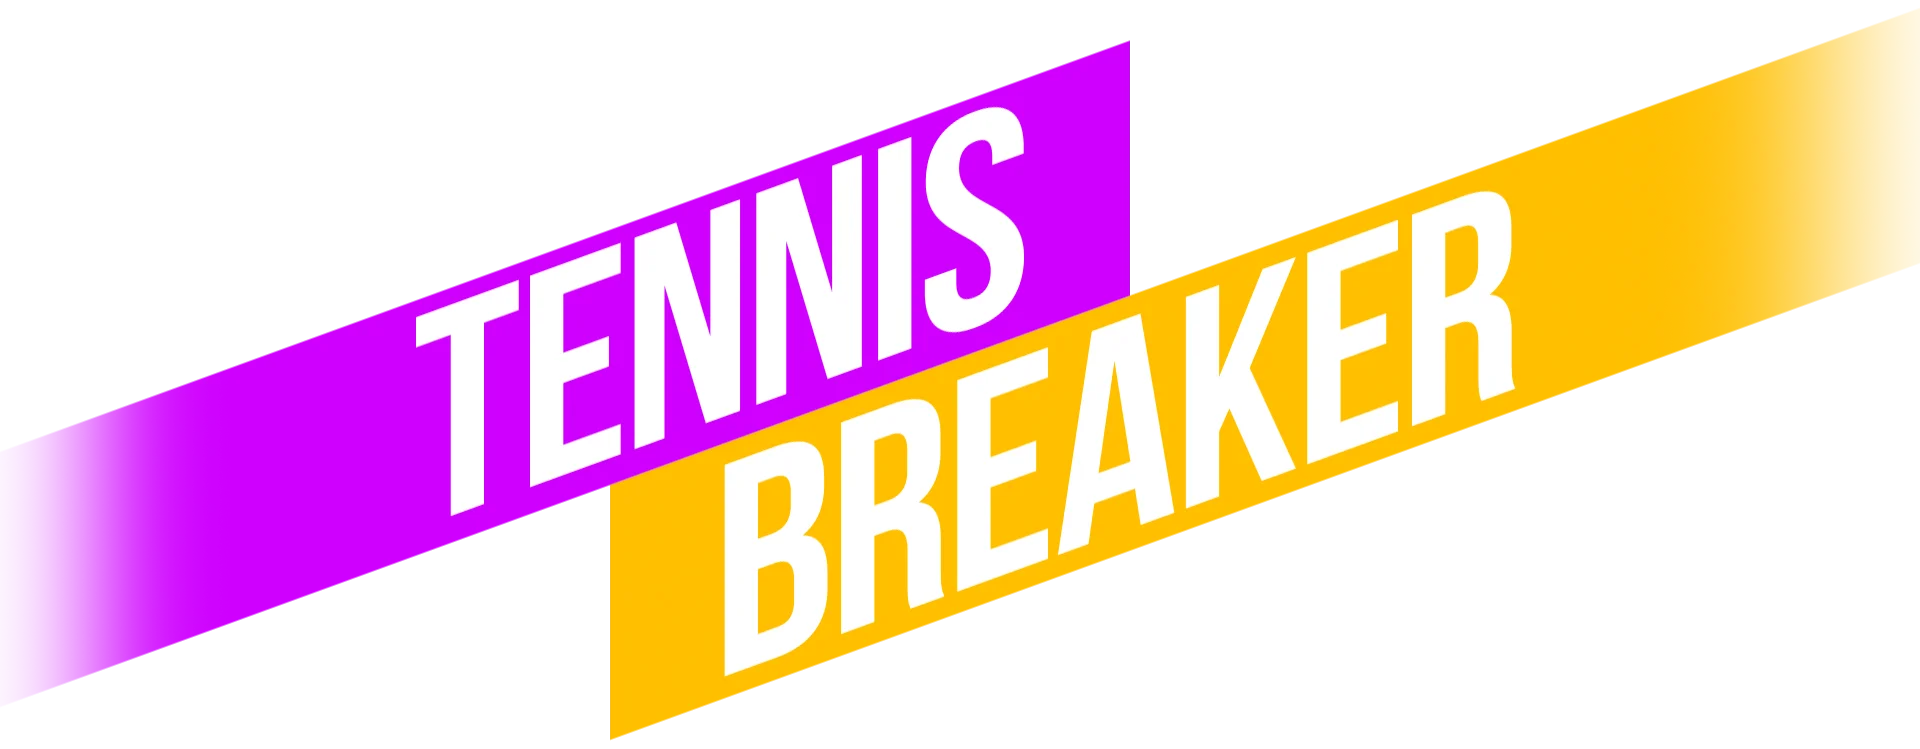 Tennis Breaker